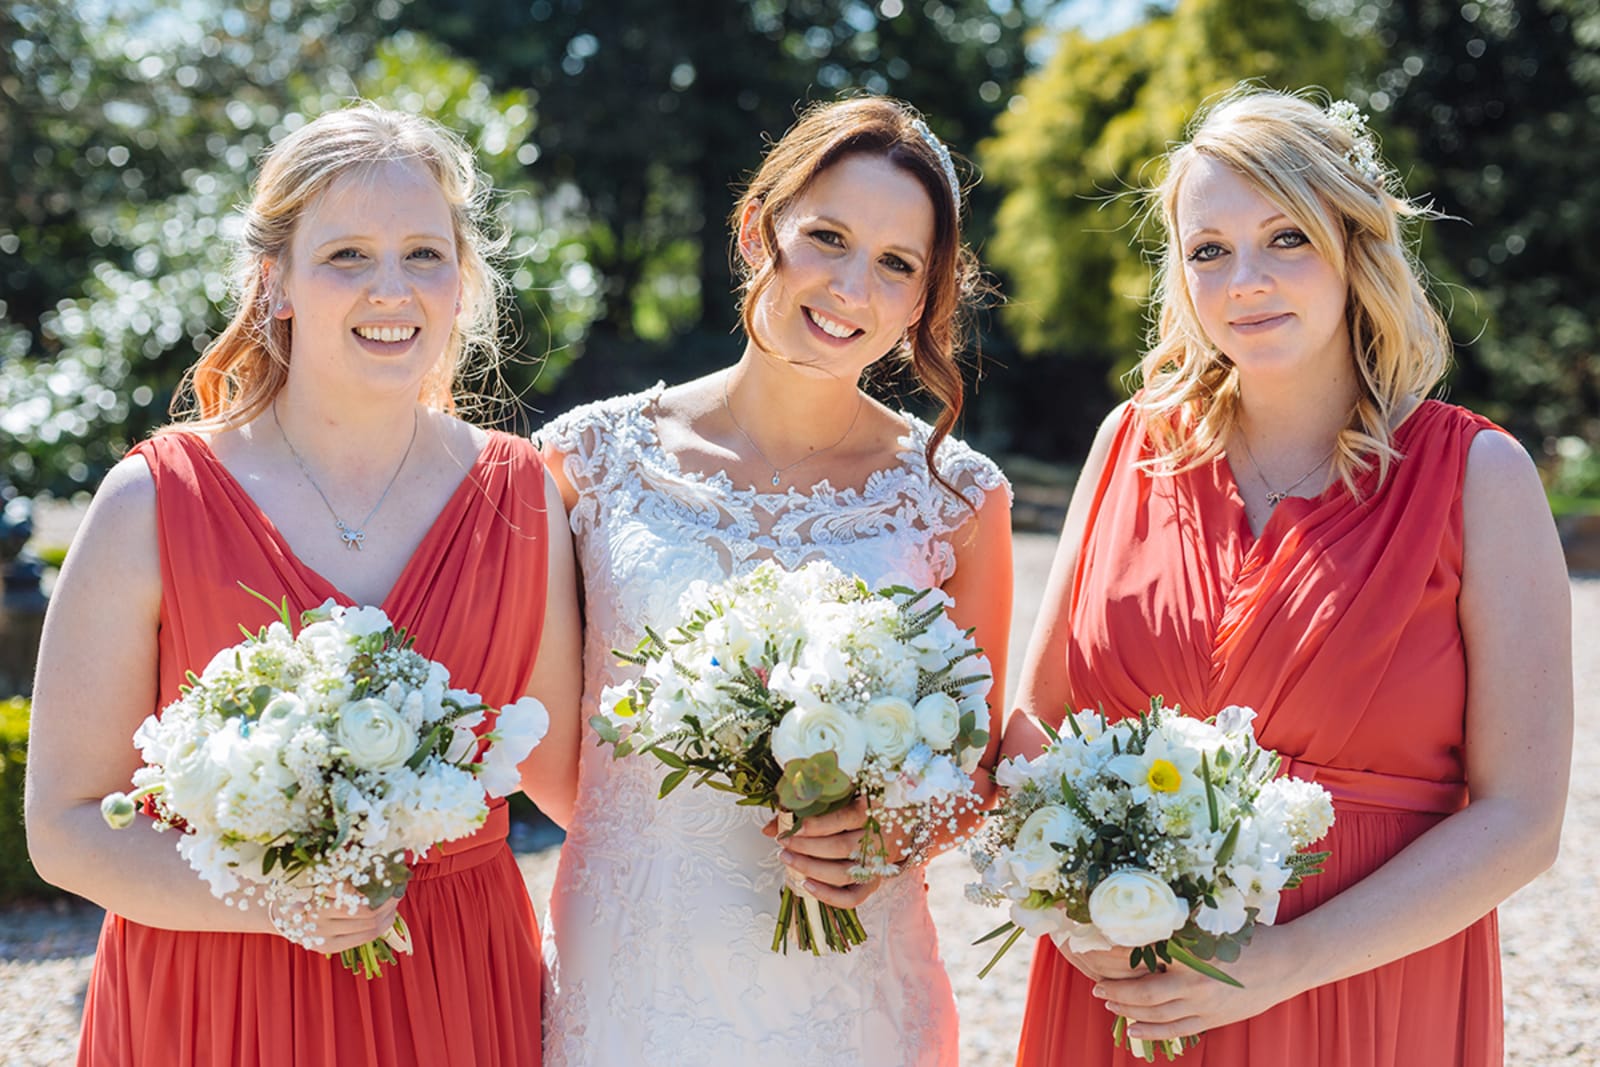 North | West Yorkshire | Halifax | Spring | Classic | DIY | Outdoor | Blue | Orange | Manor House | Real Wedding | James & Lianne Photography #Bridebook #RealWedding #WeddingIdeas Bridebook.co.uk 